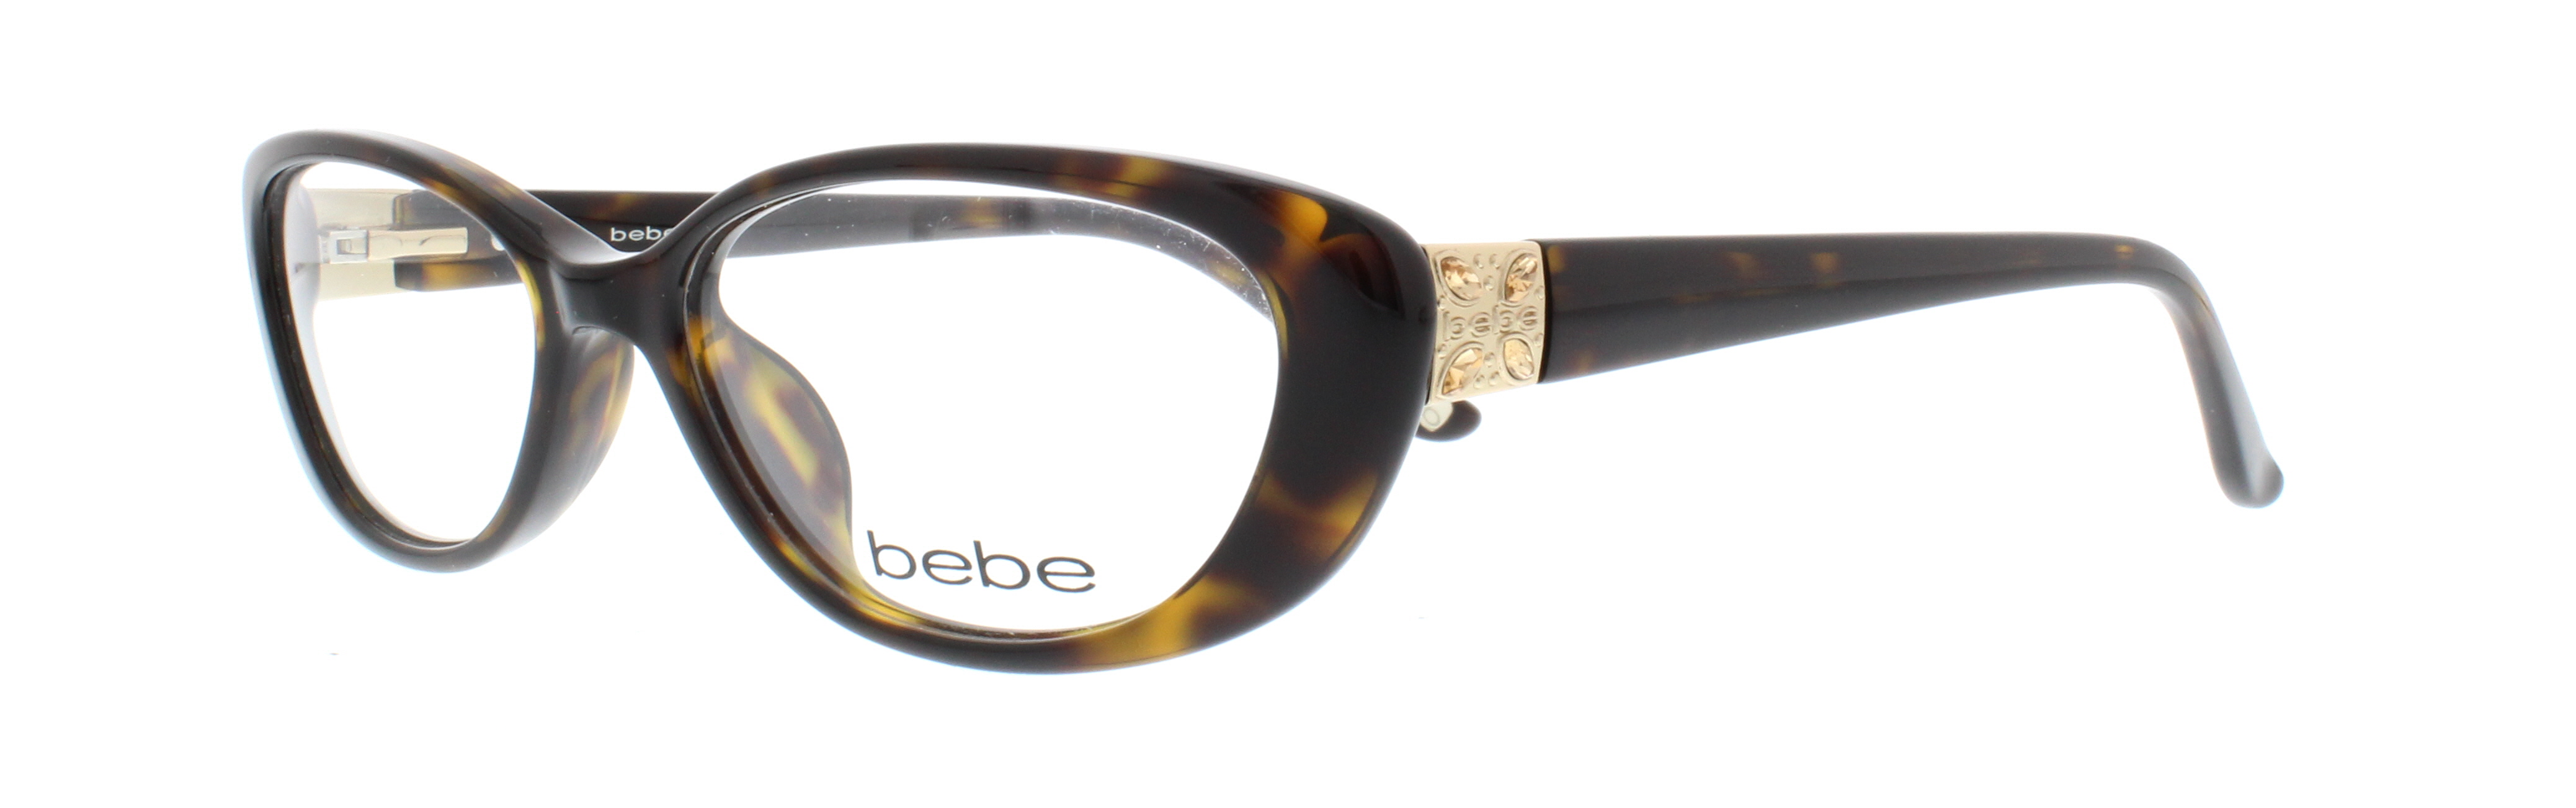 Picture of Bebe Eyeglasses BB5052